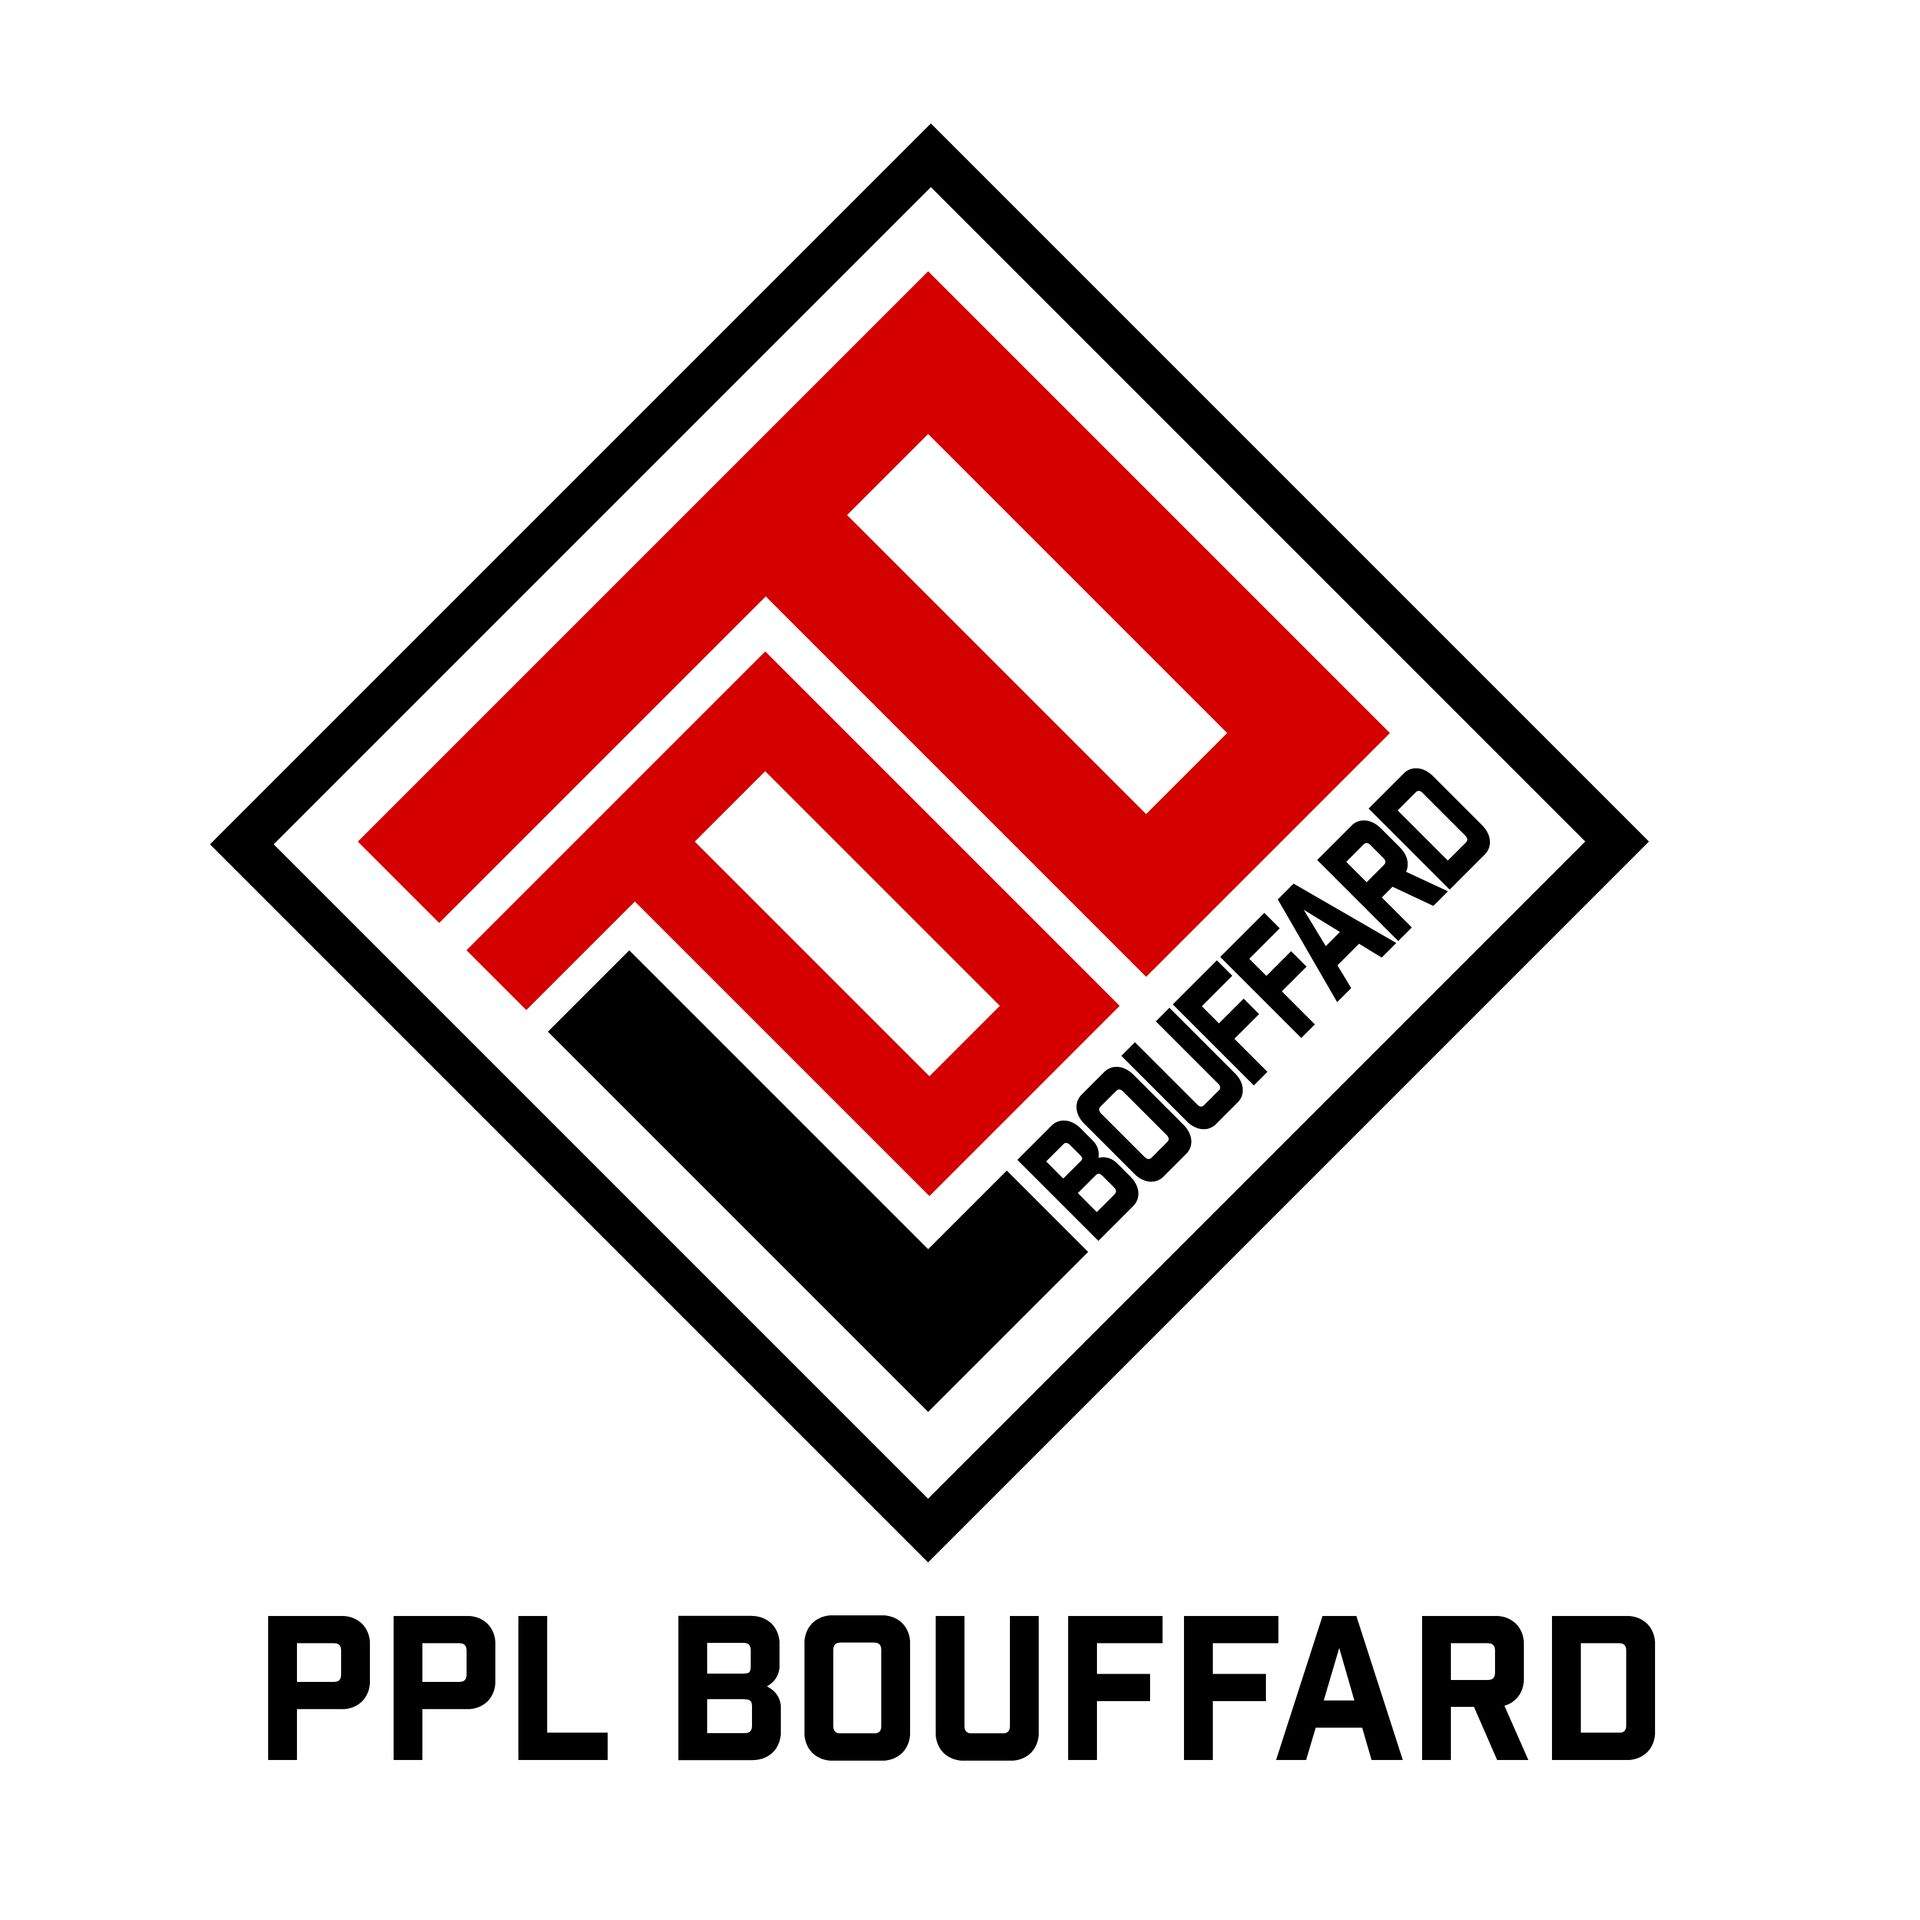 Construction PPL Bouffard LOGO